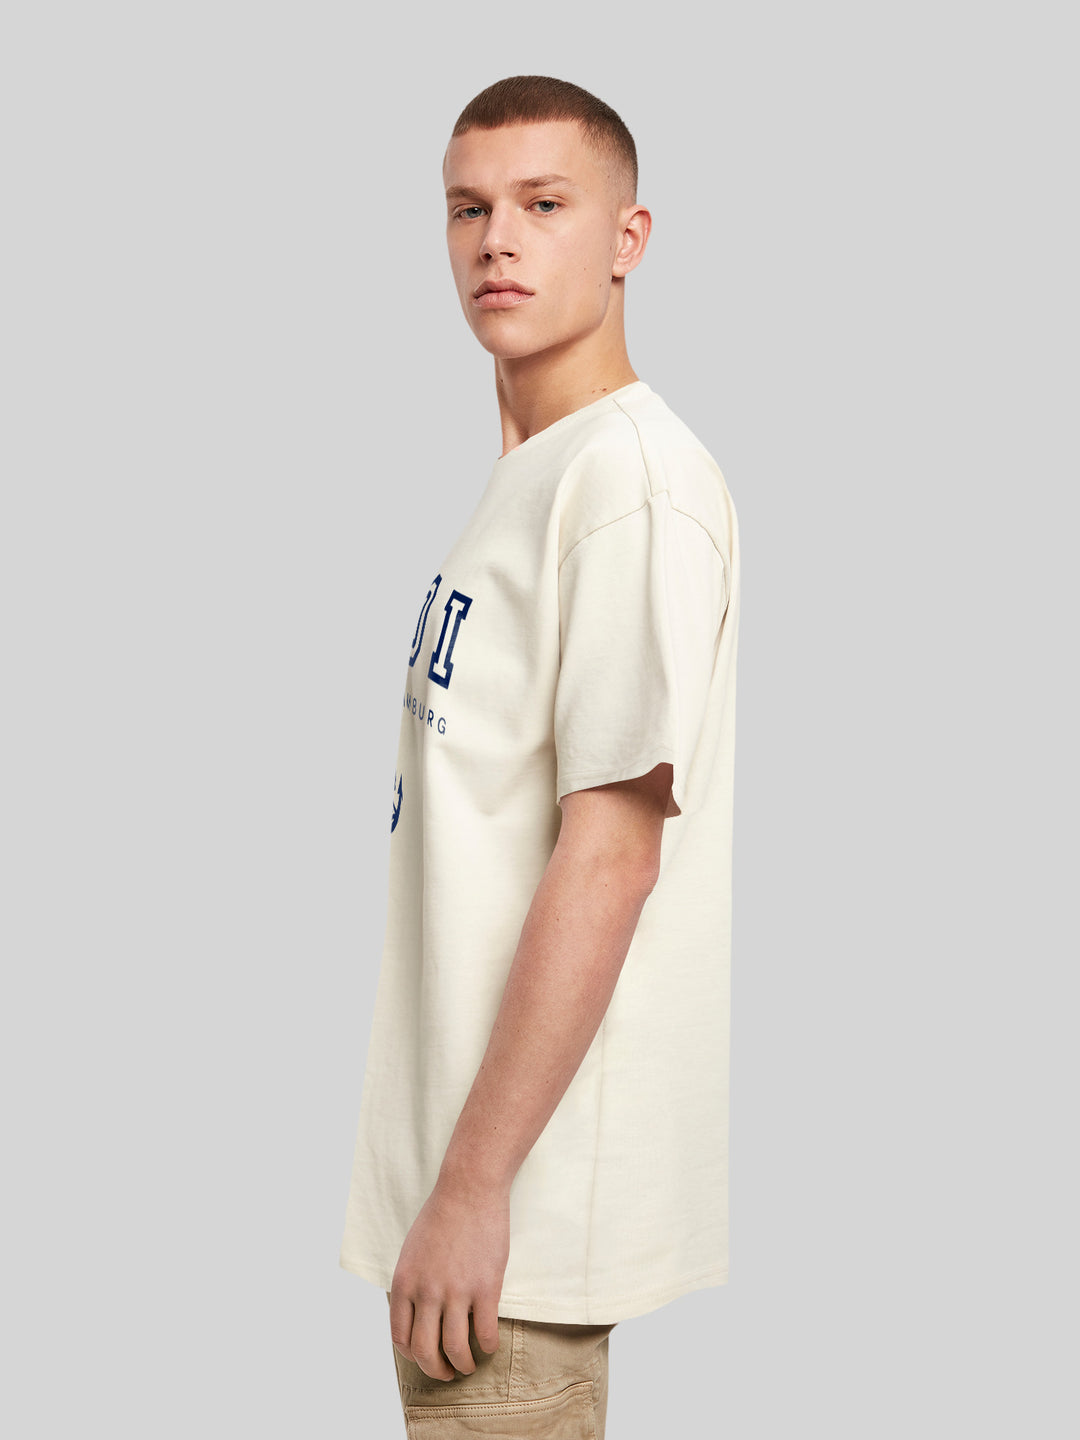 KNUT | Oversize T-Shirt Herren Ahoi